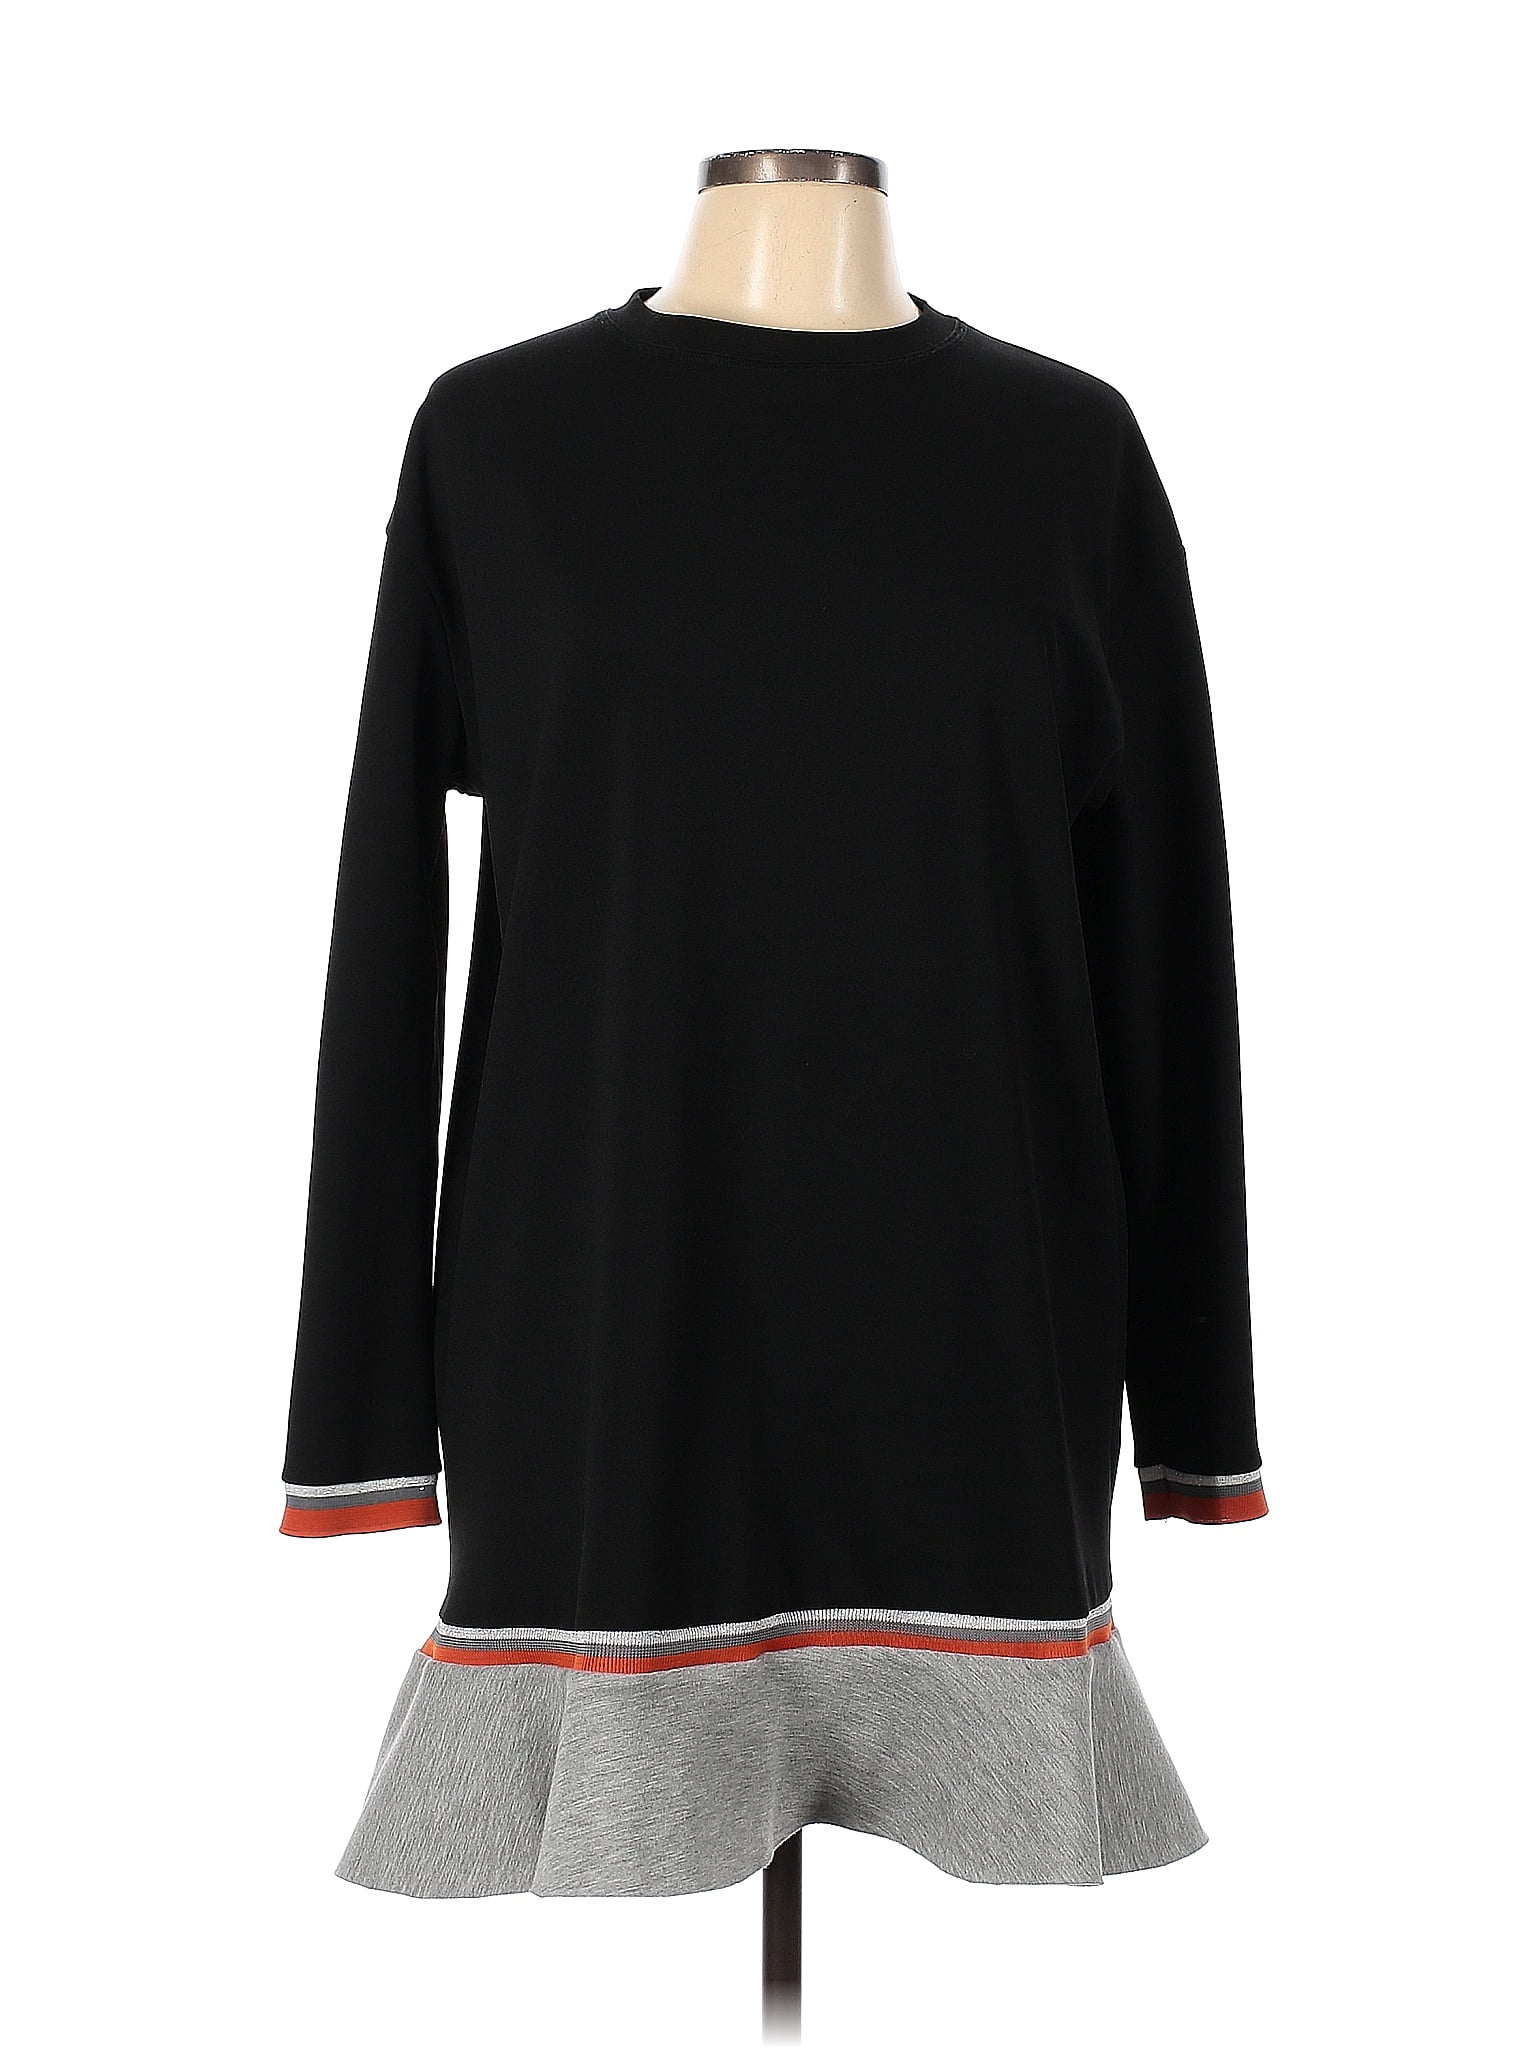 Zara Basic Color Block Black Casual Dress Size L - 52% off | thredUP